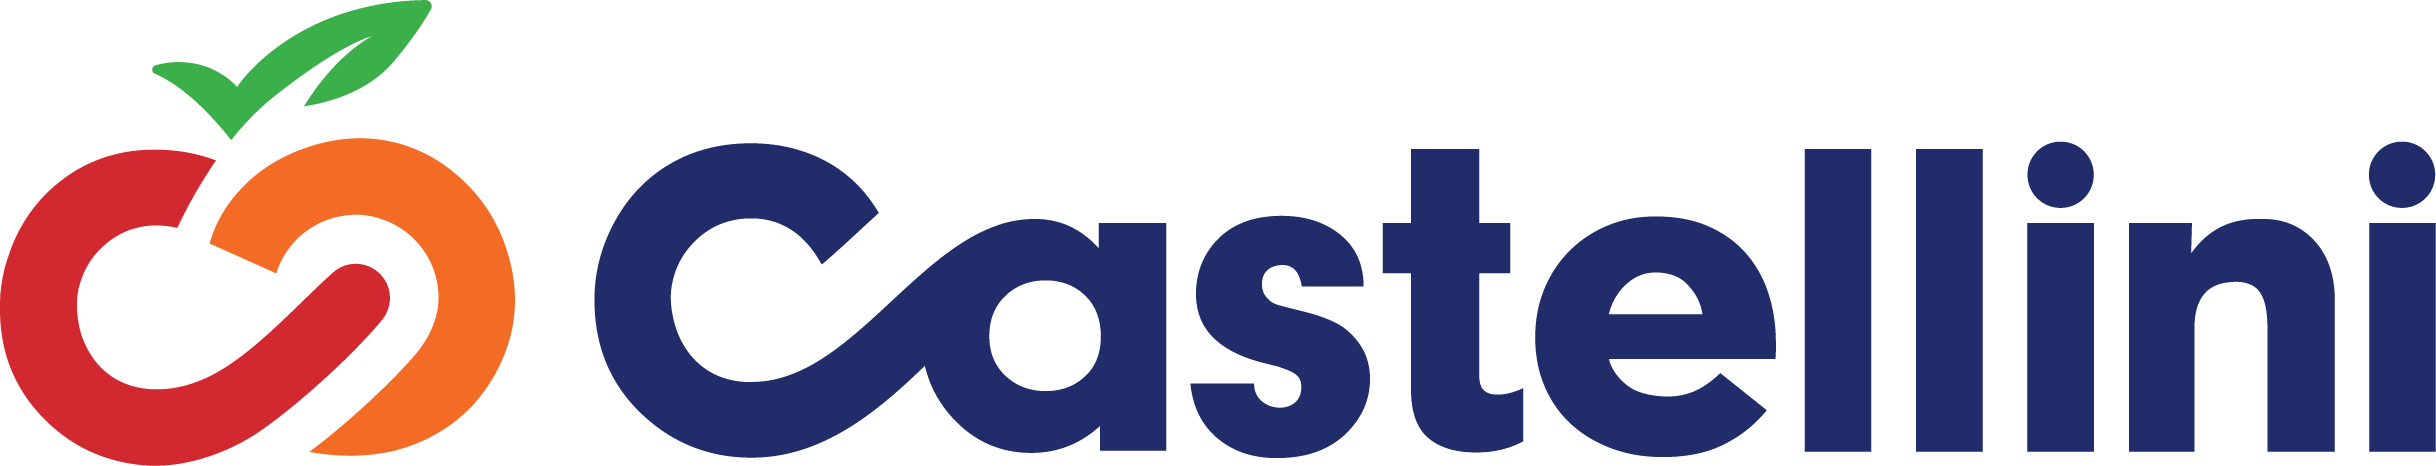 Castellini_Logo-Horizontal.png